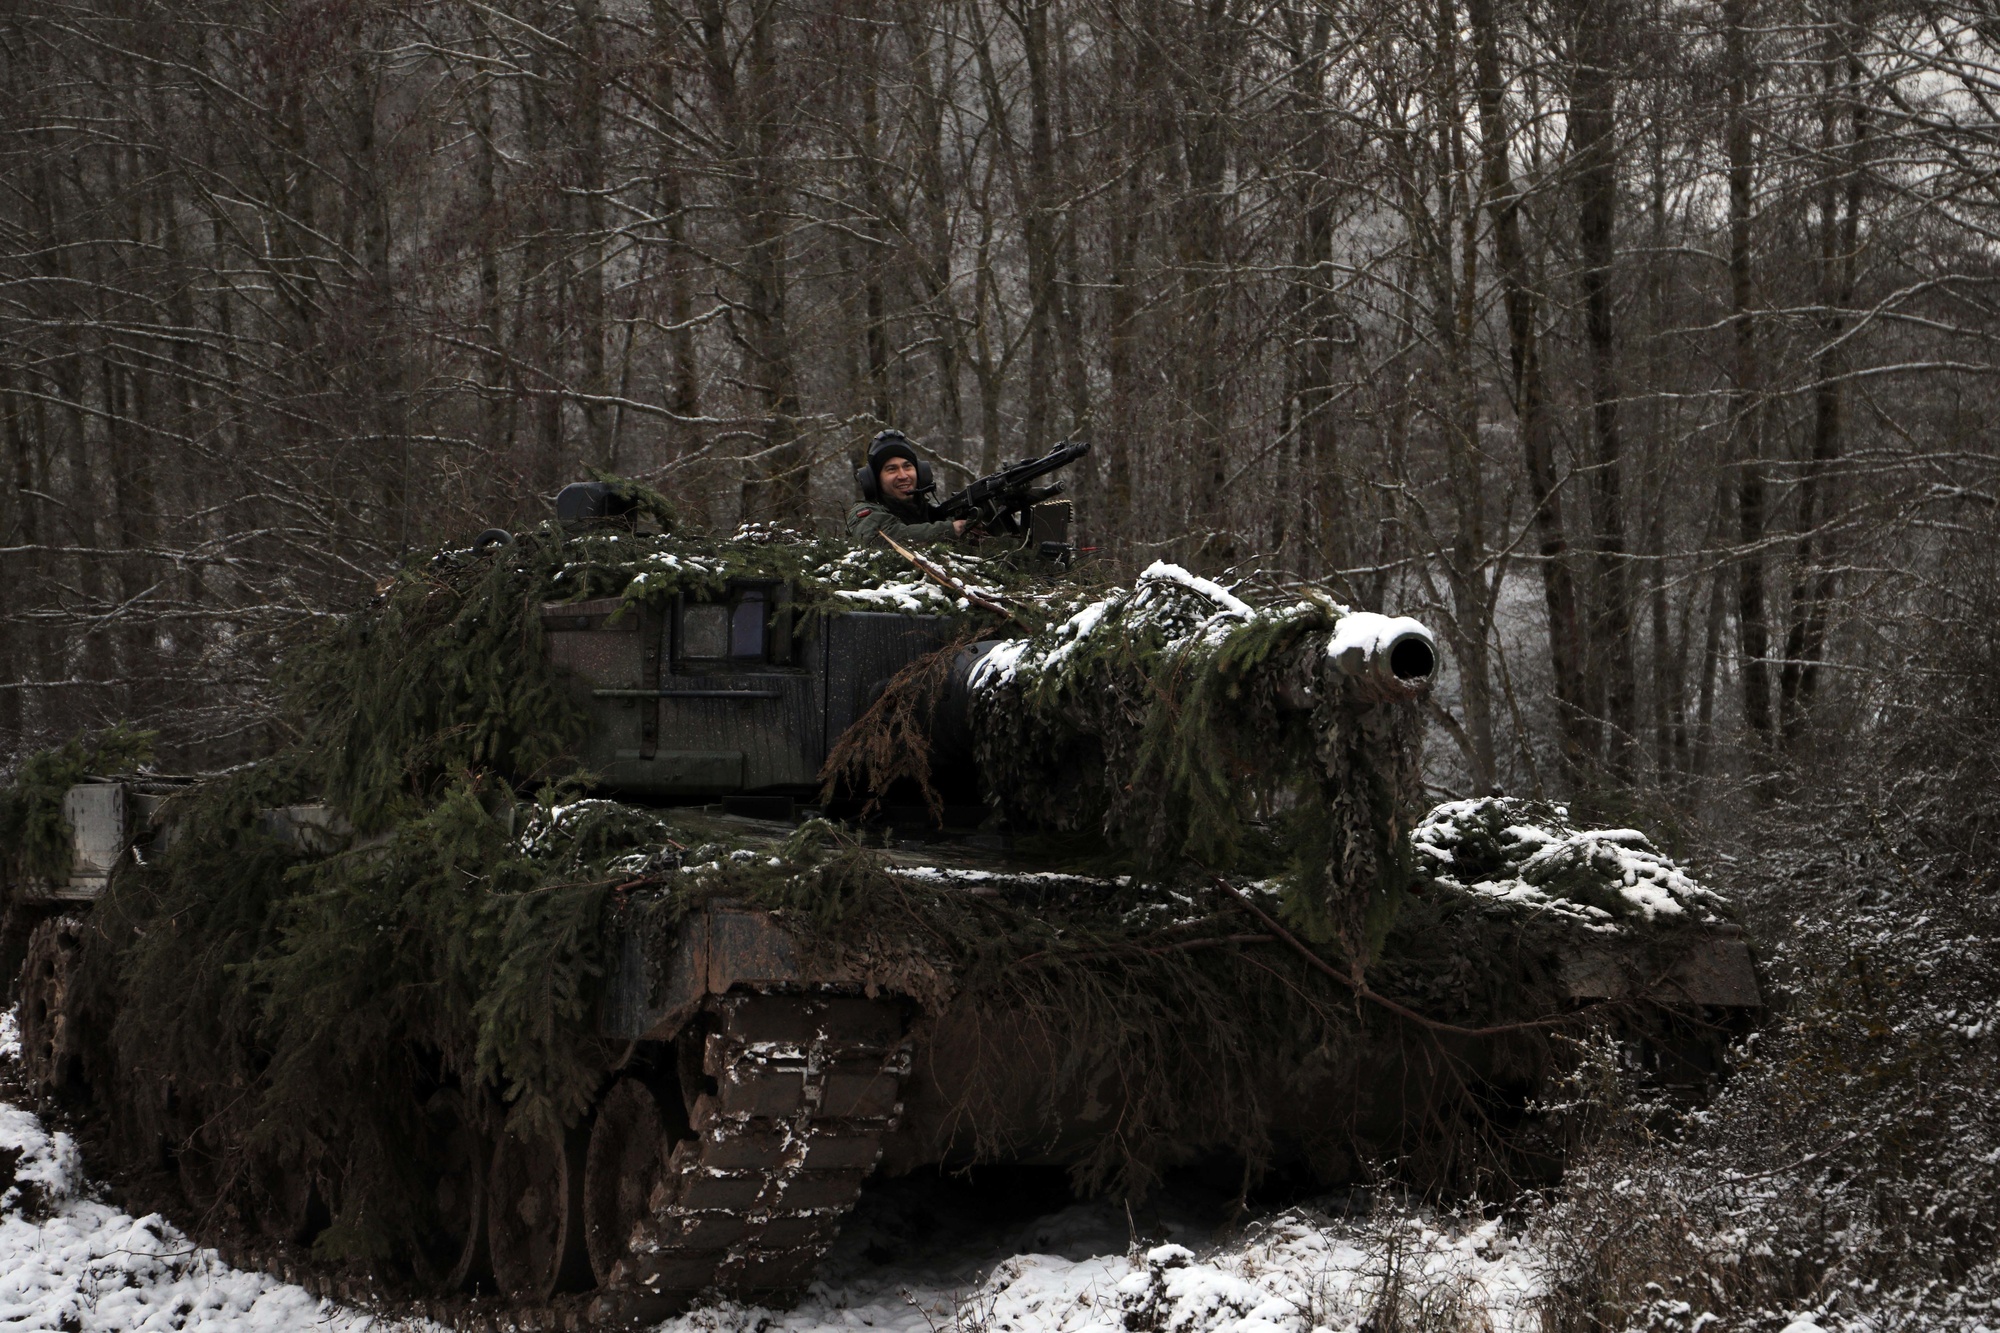 Images - Polish tanks on the battlefield [Image 3 of 5] - DVIDS